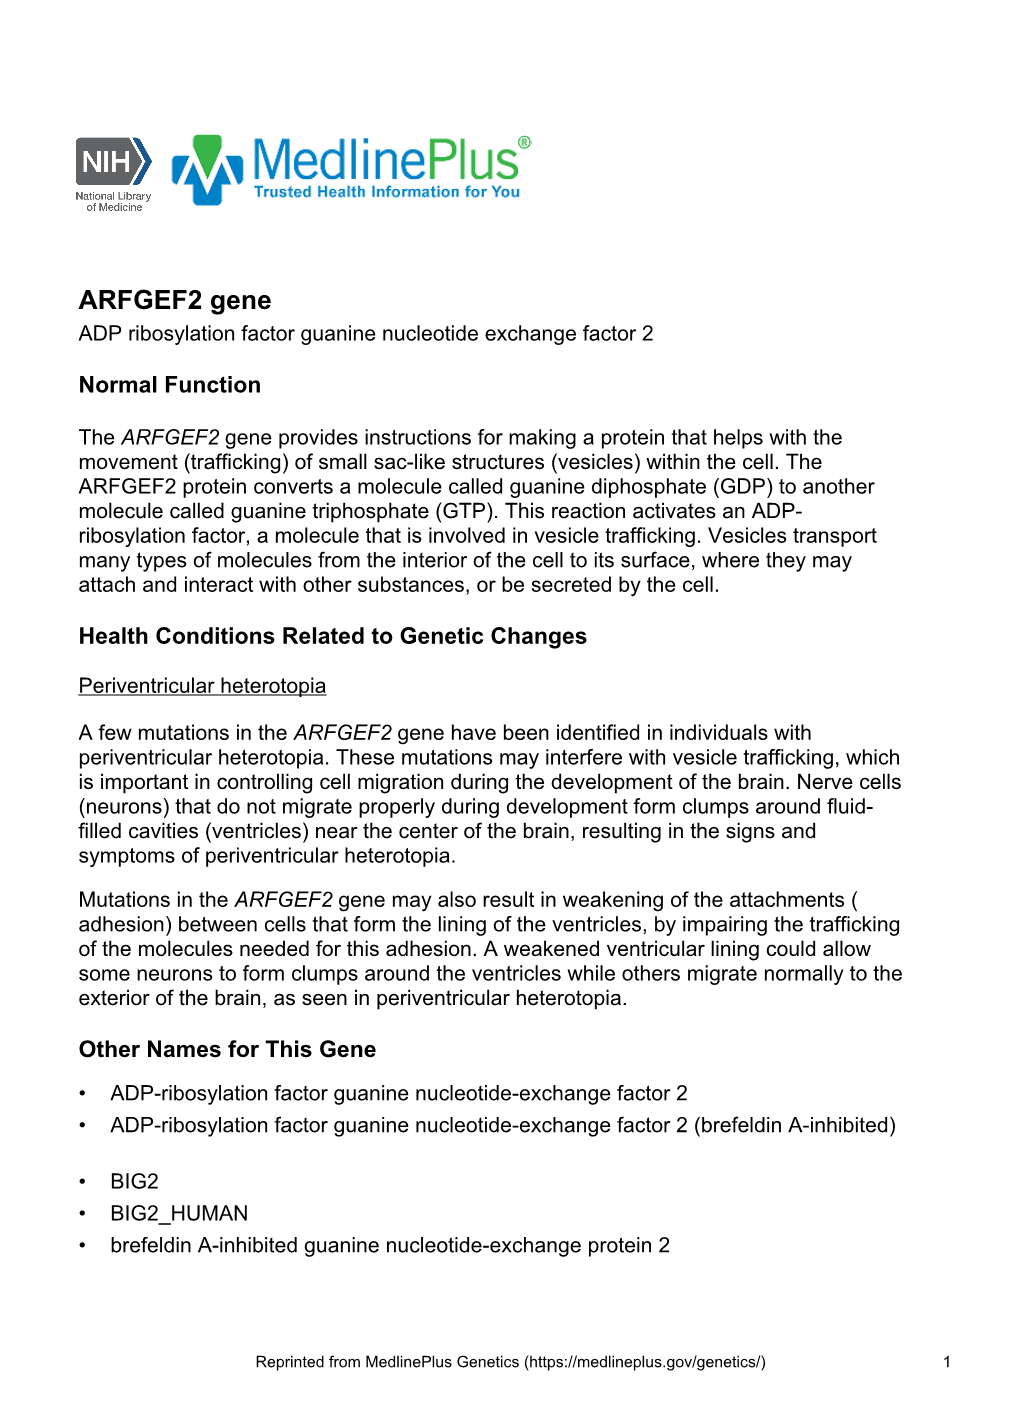 ARFGEF2 Gene ADP Ribosylation Factor Guanine Nucleotide Exchange Factor 2